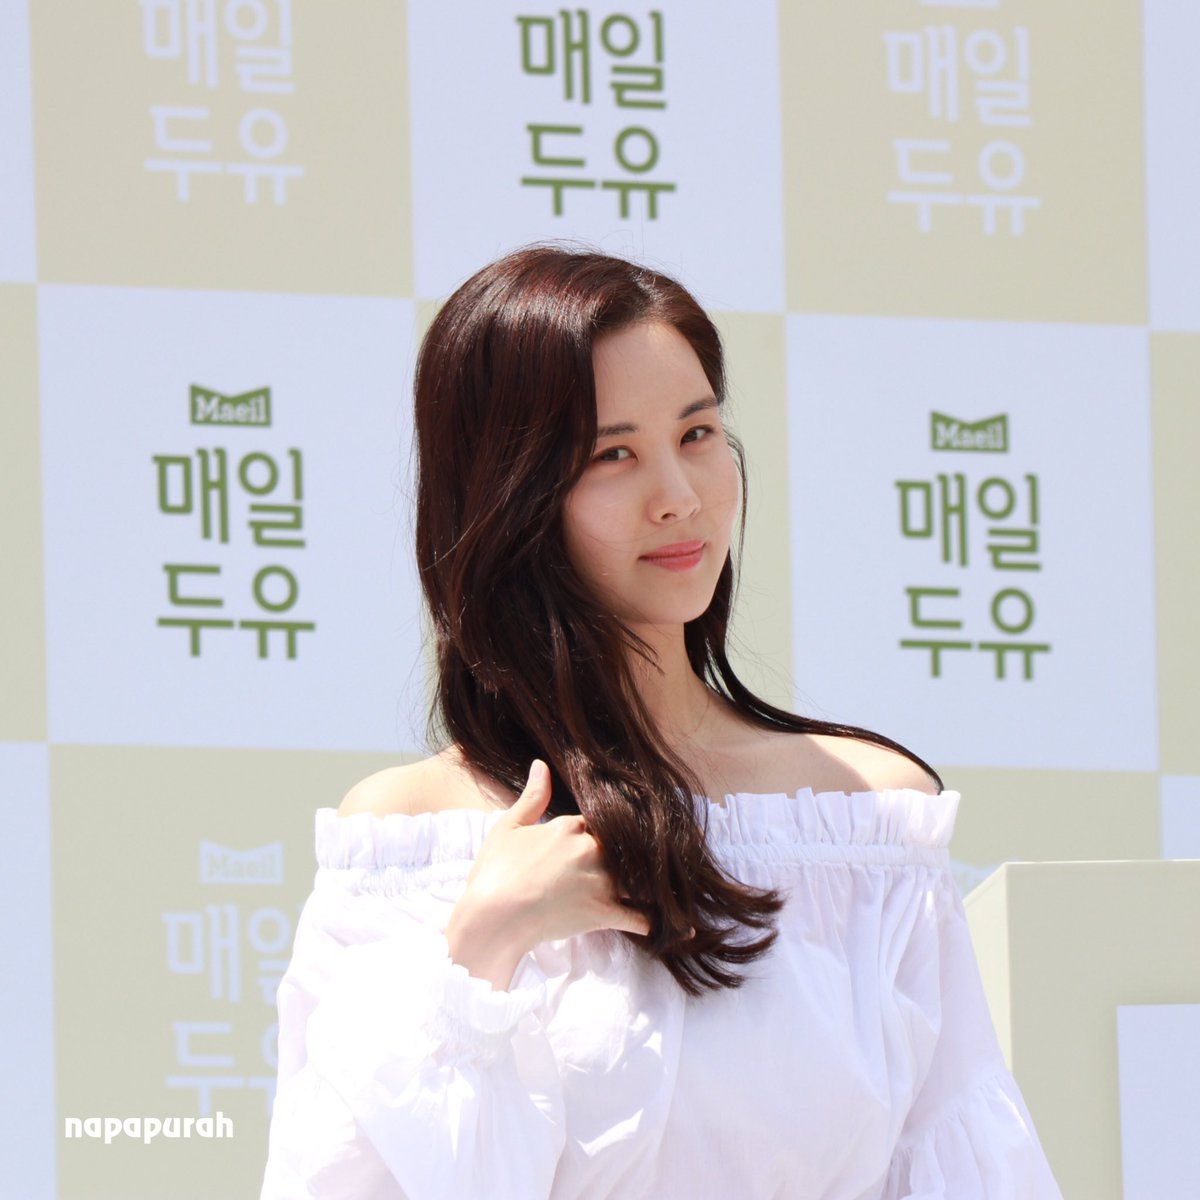  [PIC][03-06-2017]SeoHyun tham dự sự kiện “City Forestival - Maeil Duyou 'Confidence Diary'” vào chiều nay - Page 3 DBpDcx6V0AAVnHh